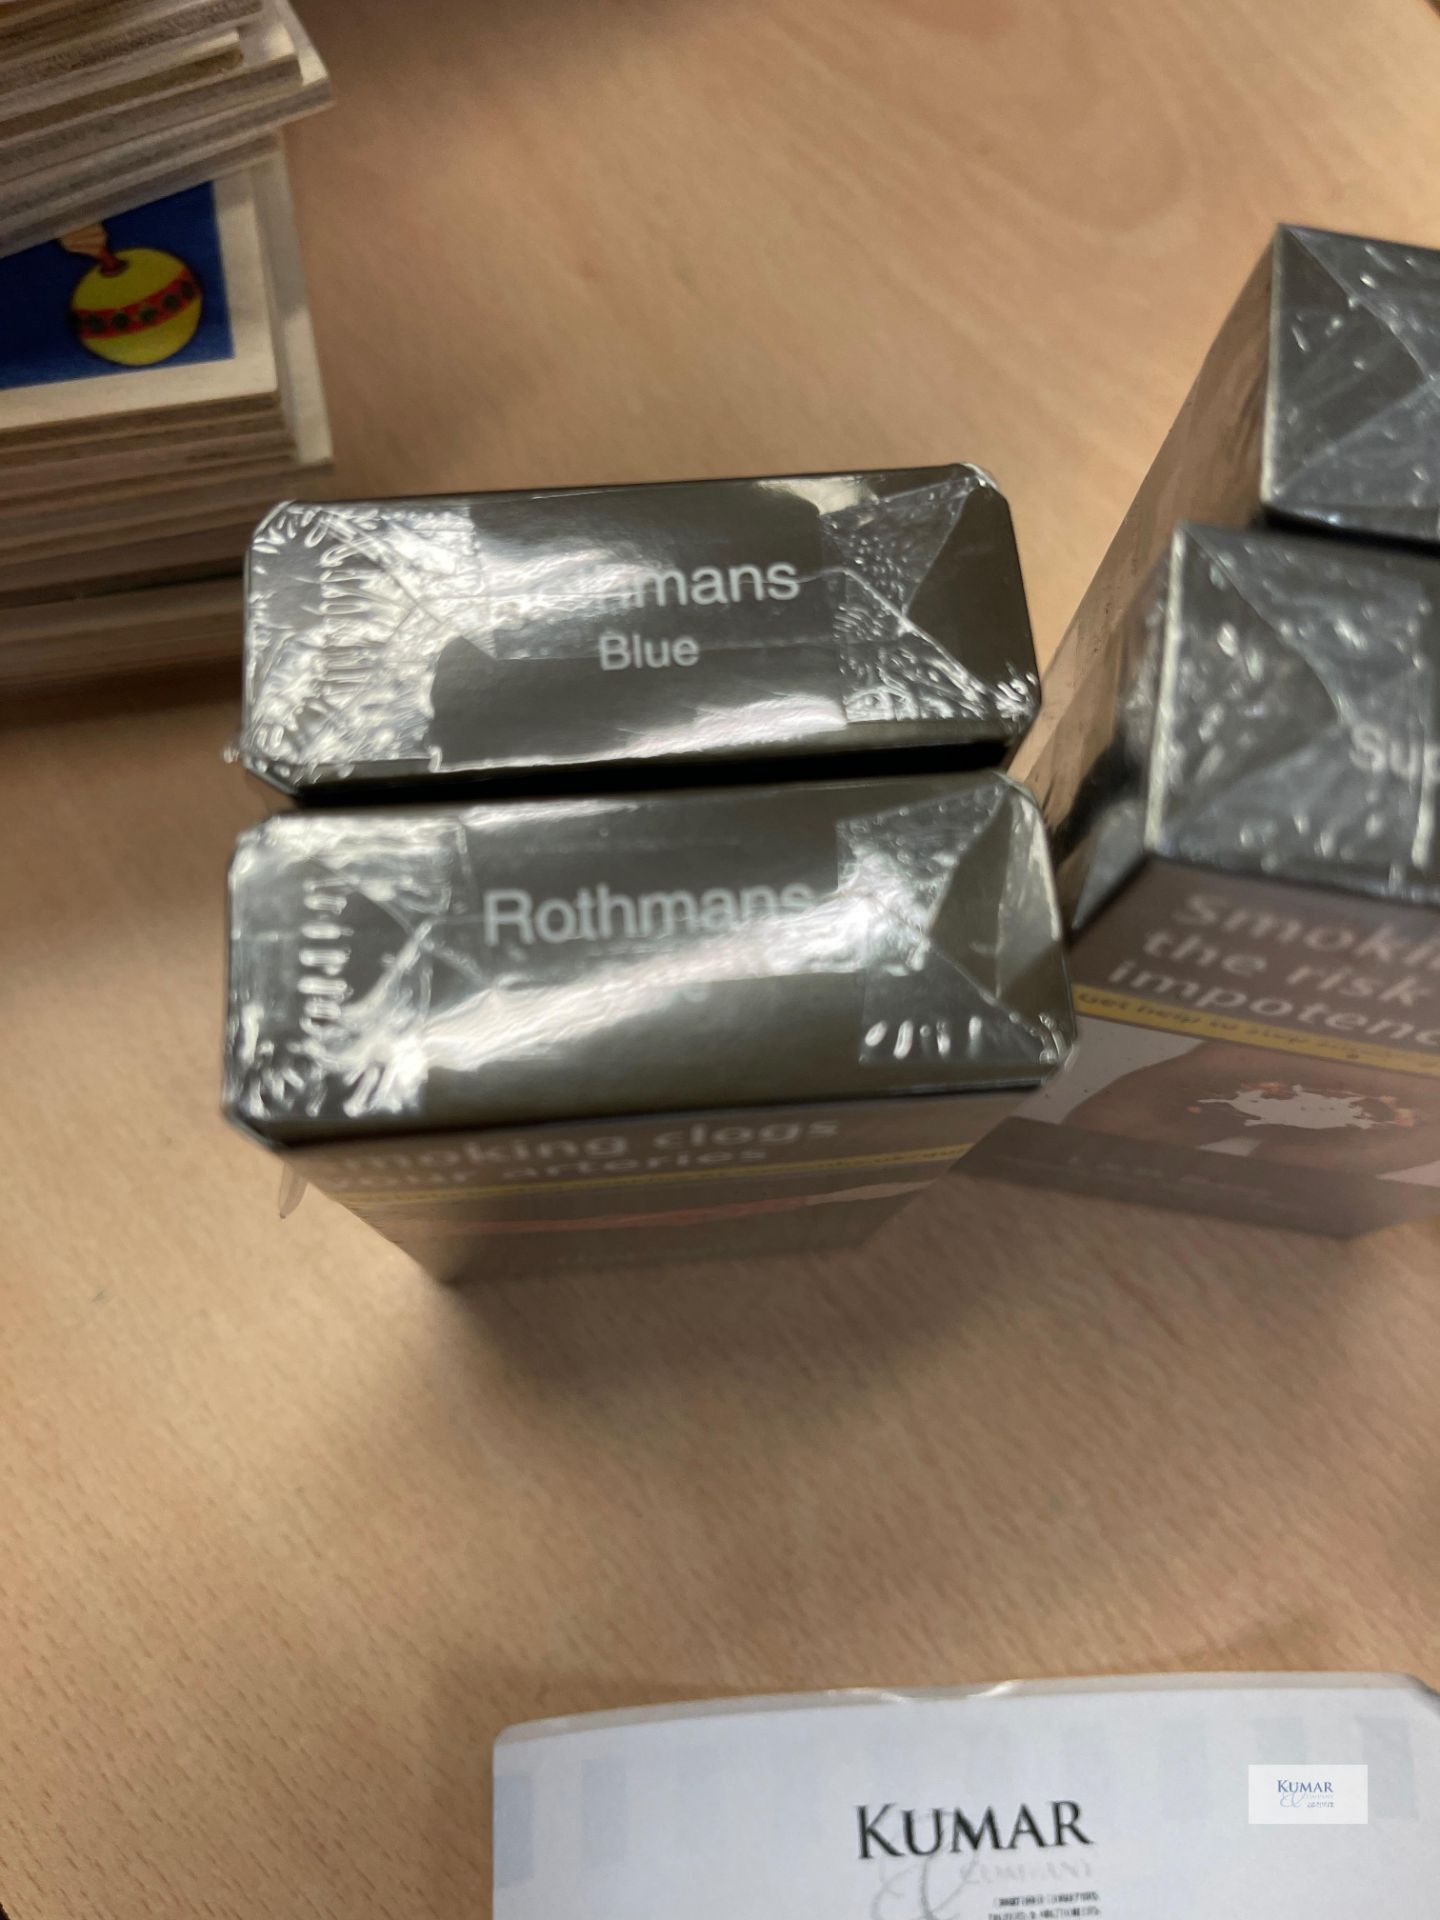 2 Packs: Rothmans Blue 20 Cigarettes, 2 Packs: L&B Blue Super kings Bright Blue 20 Cigarettes, 5 - Image 5 of 29